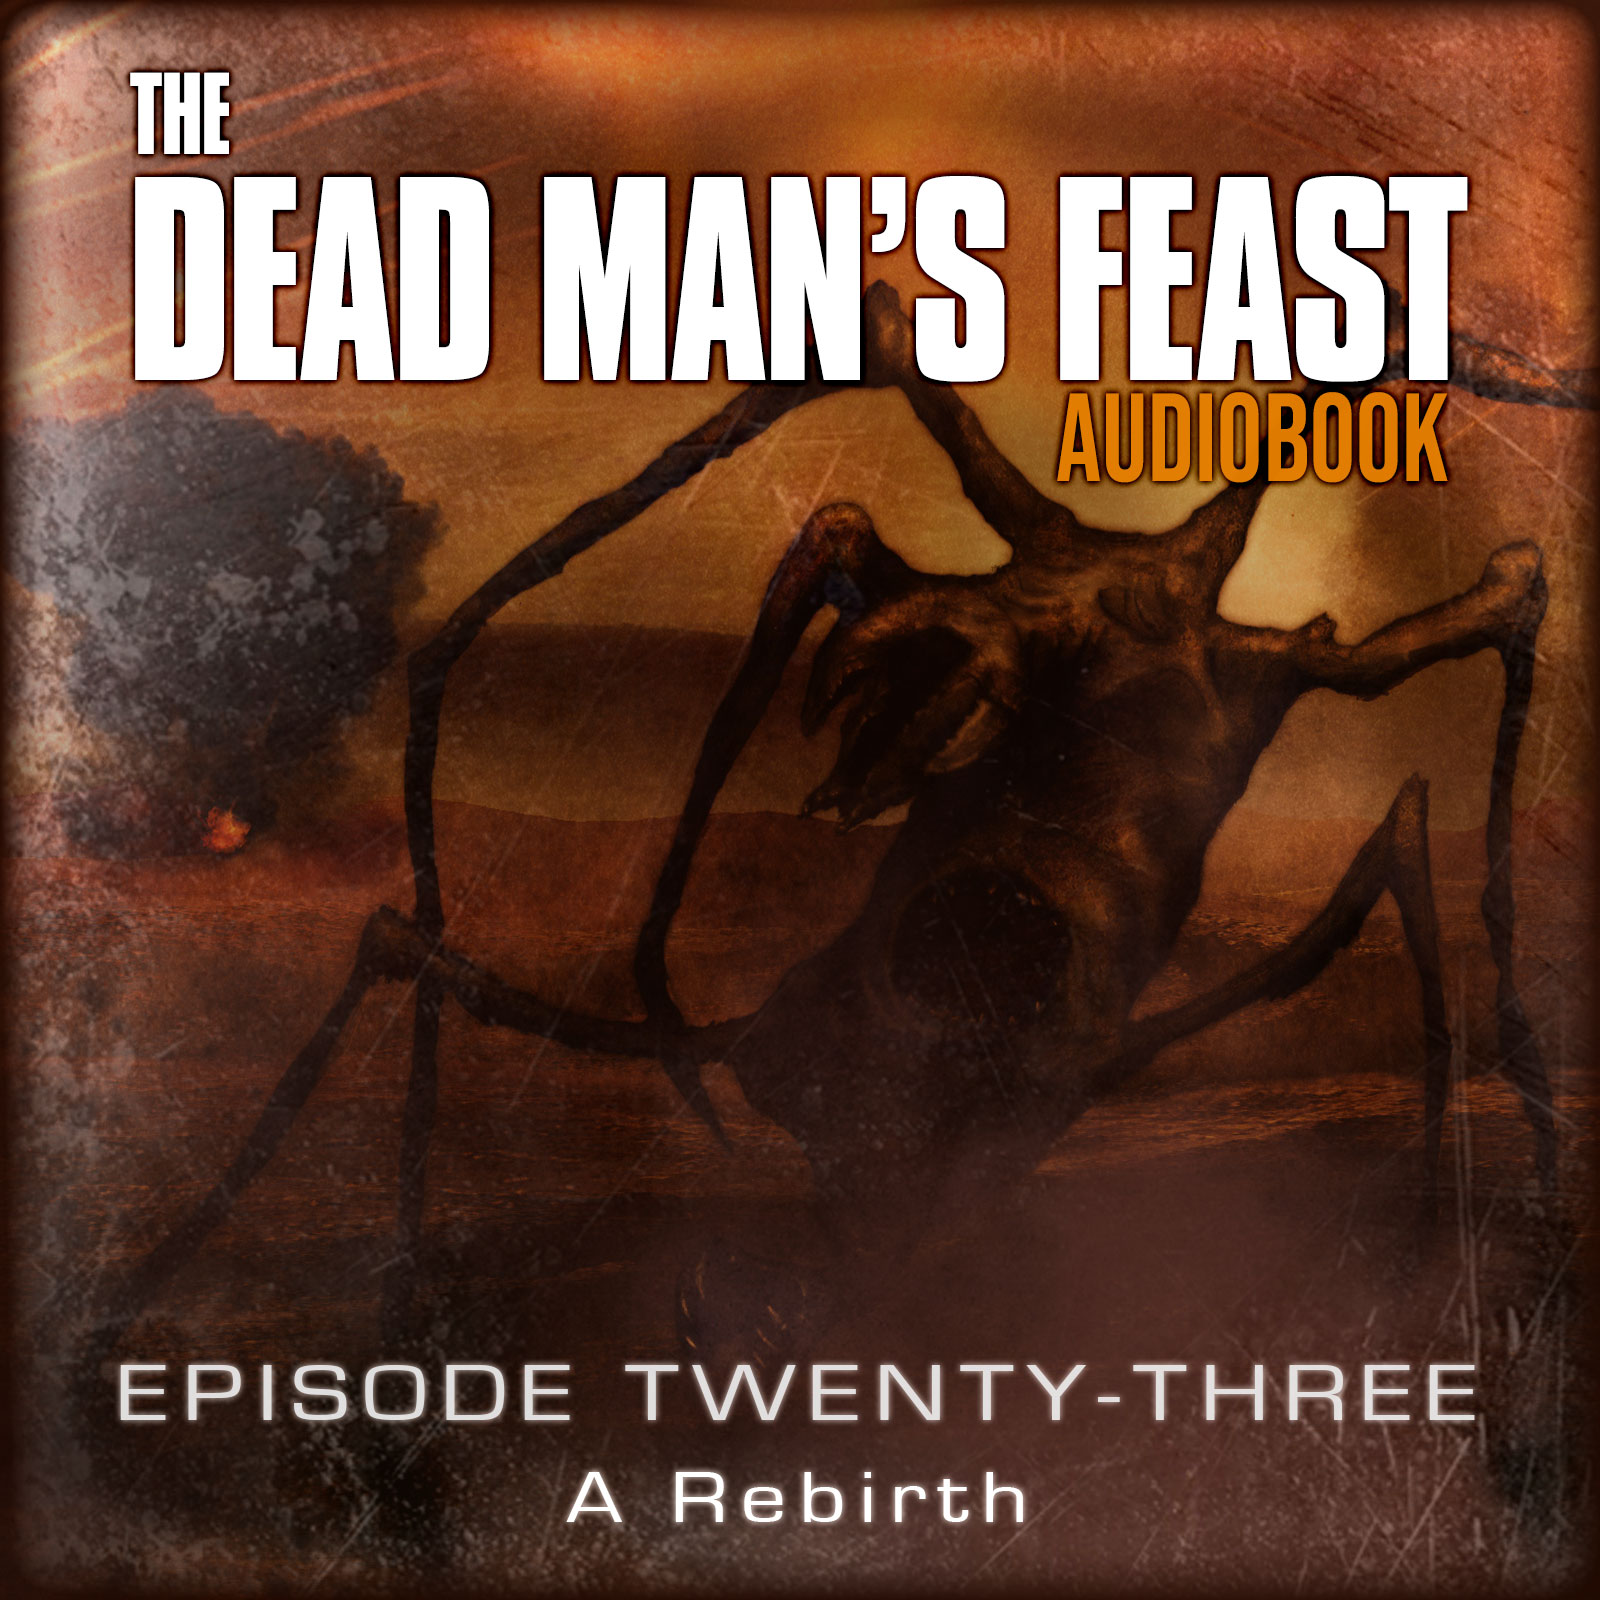 The Dead Man's Feast